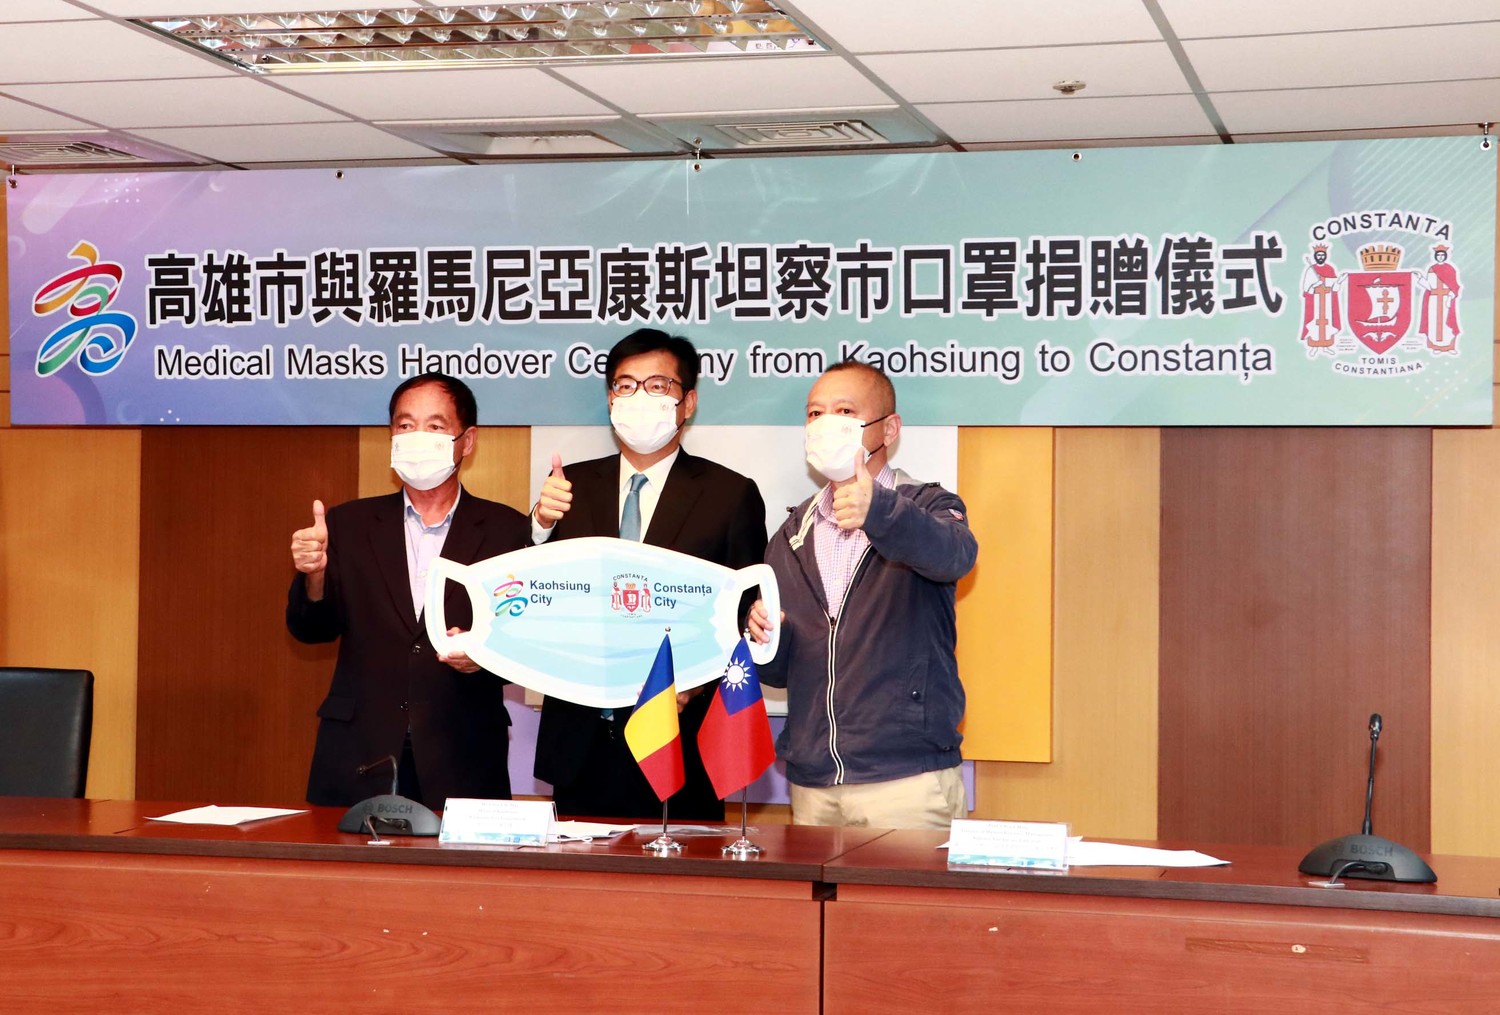 Kaohsiung is helping！ 陳其邁代表捐贈羅馬尼亞20萬份口罩